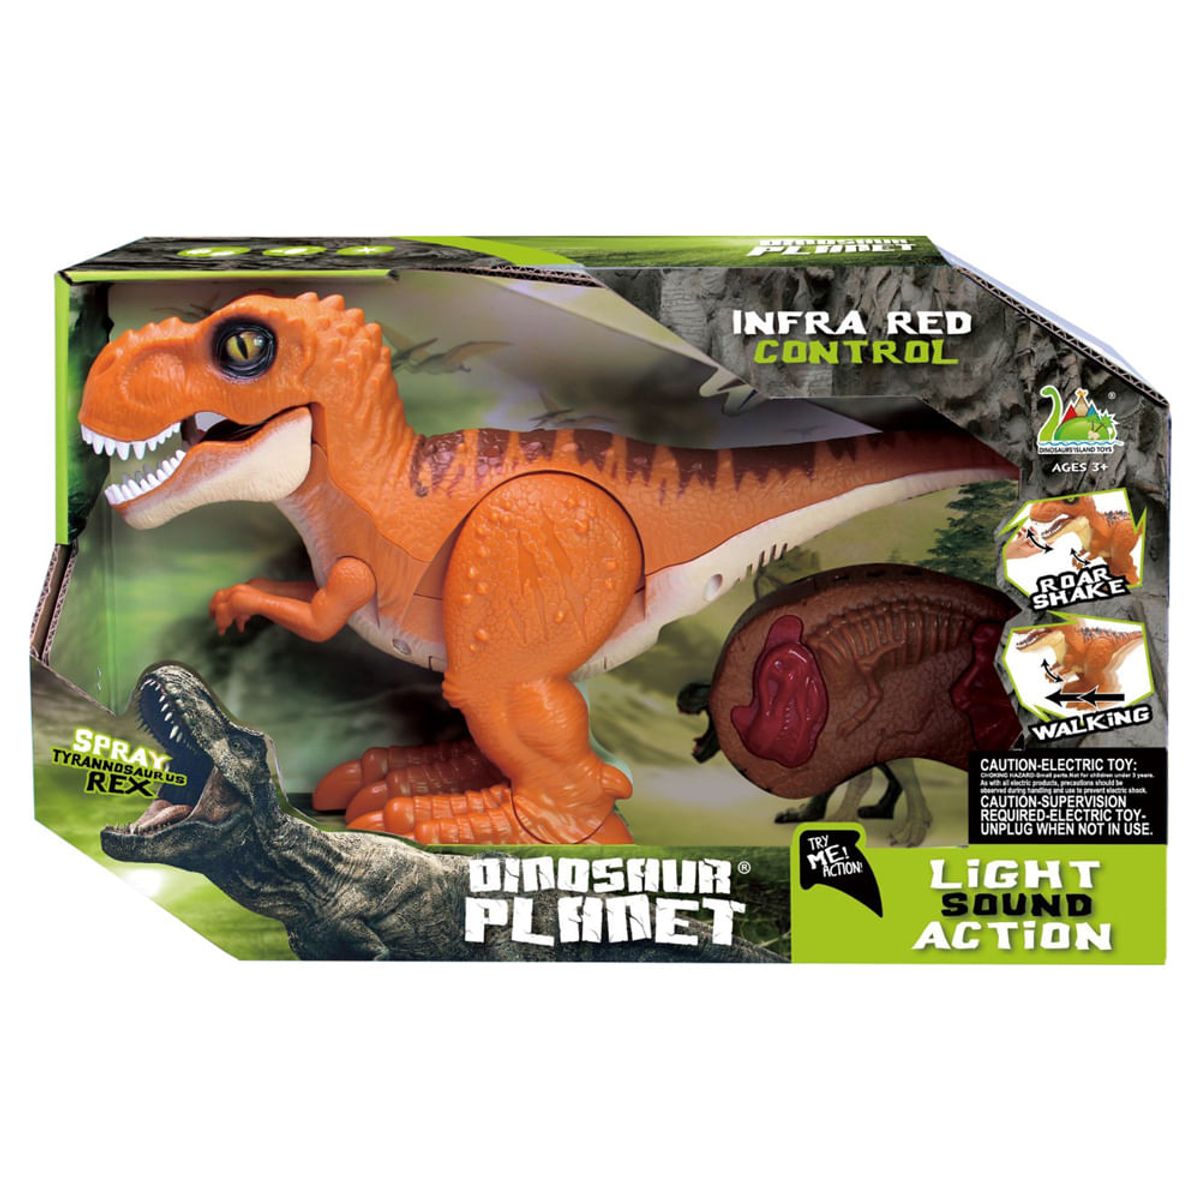 Jurassic Fun Dinossauro Rex R/C Com Luz - BR1461 - Ibyte